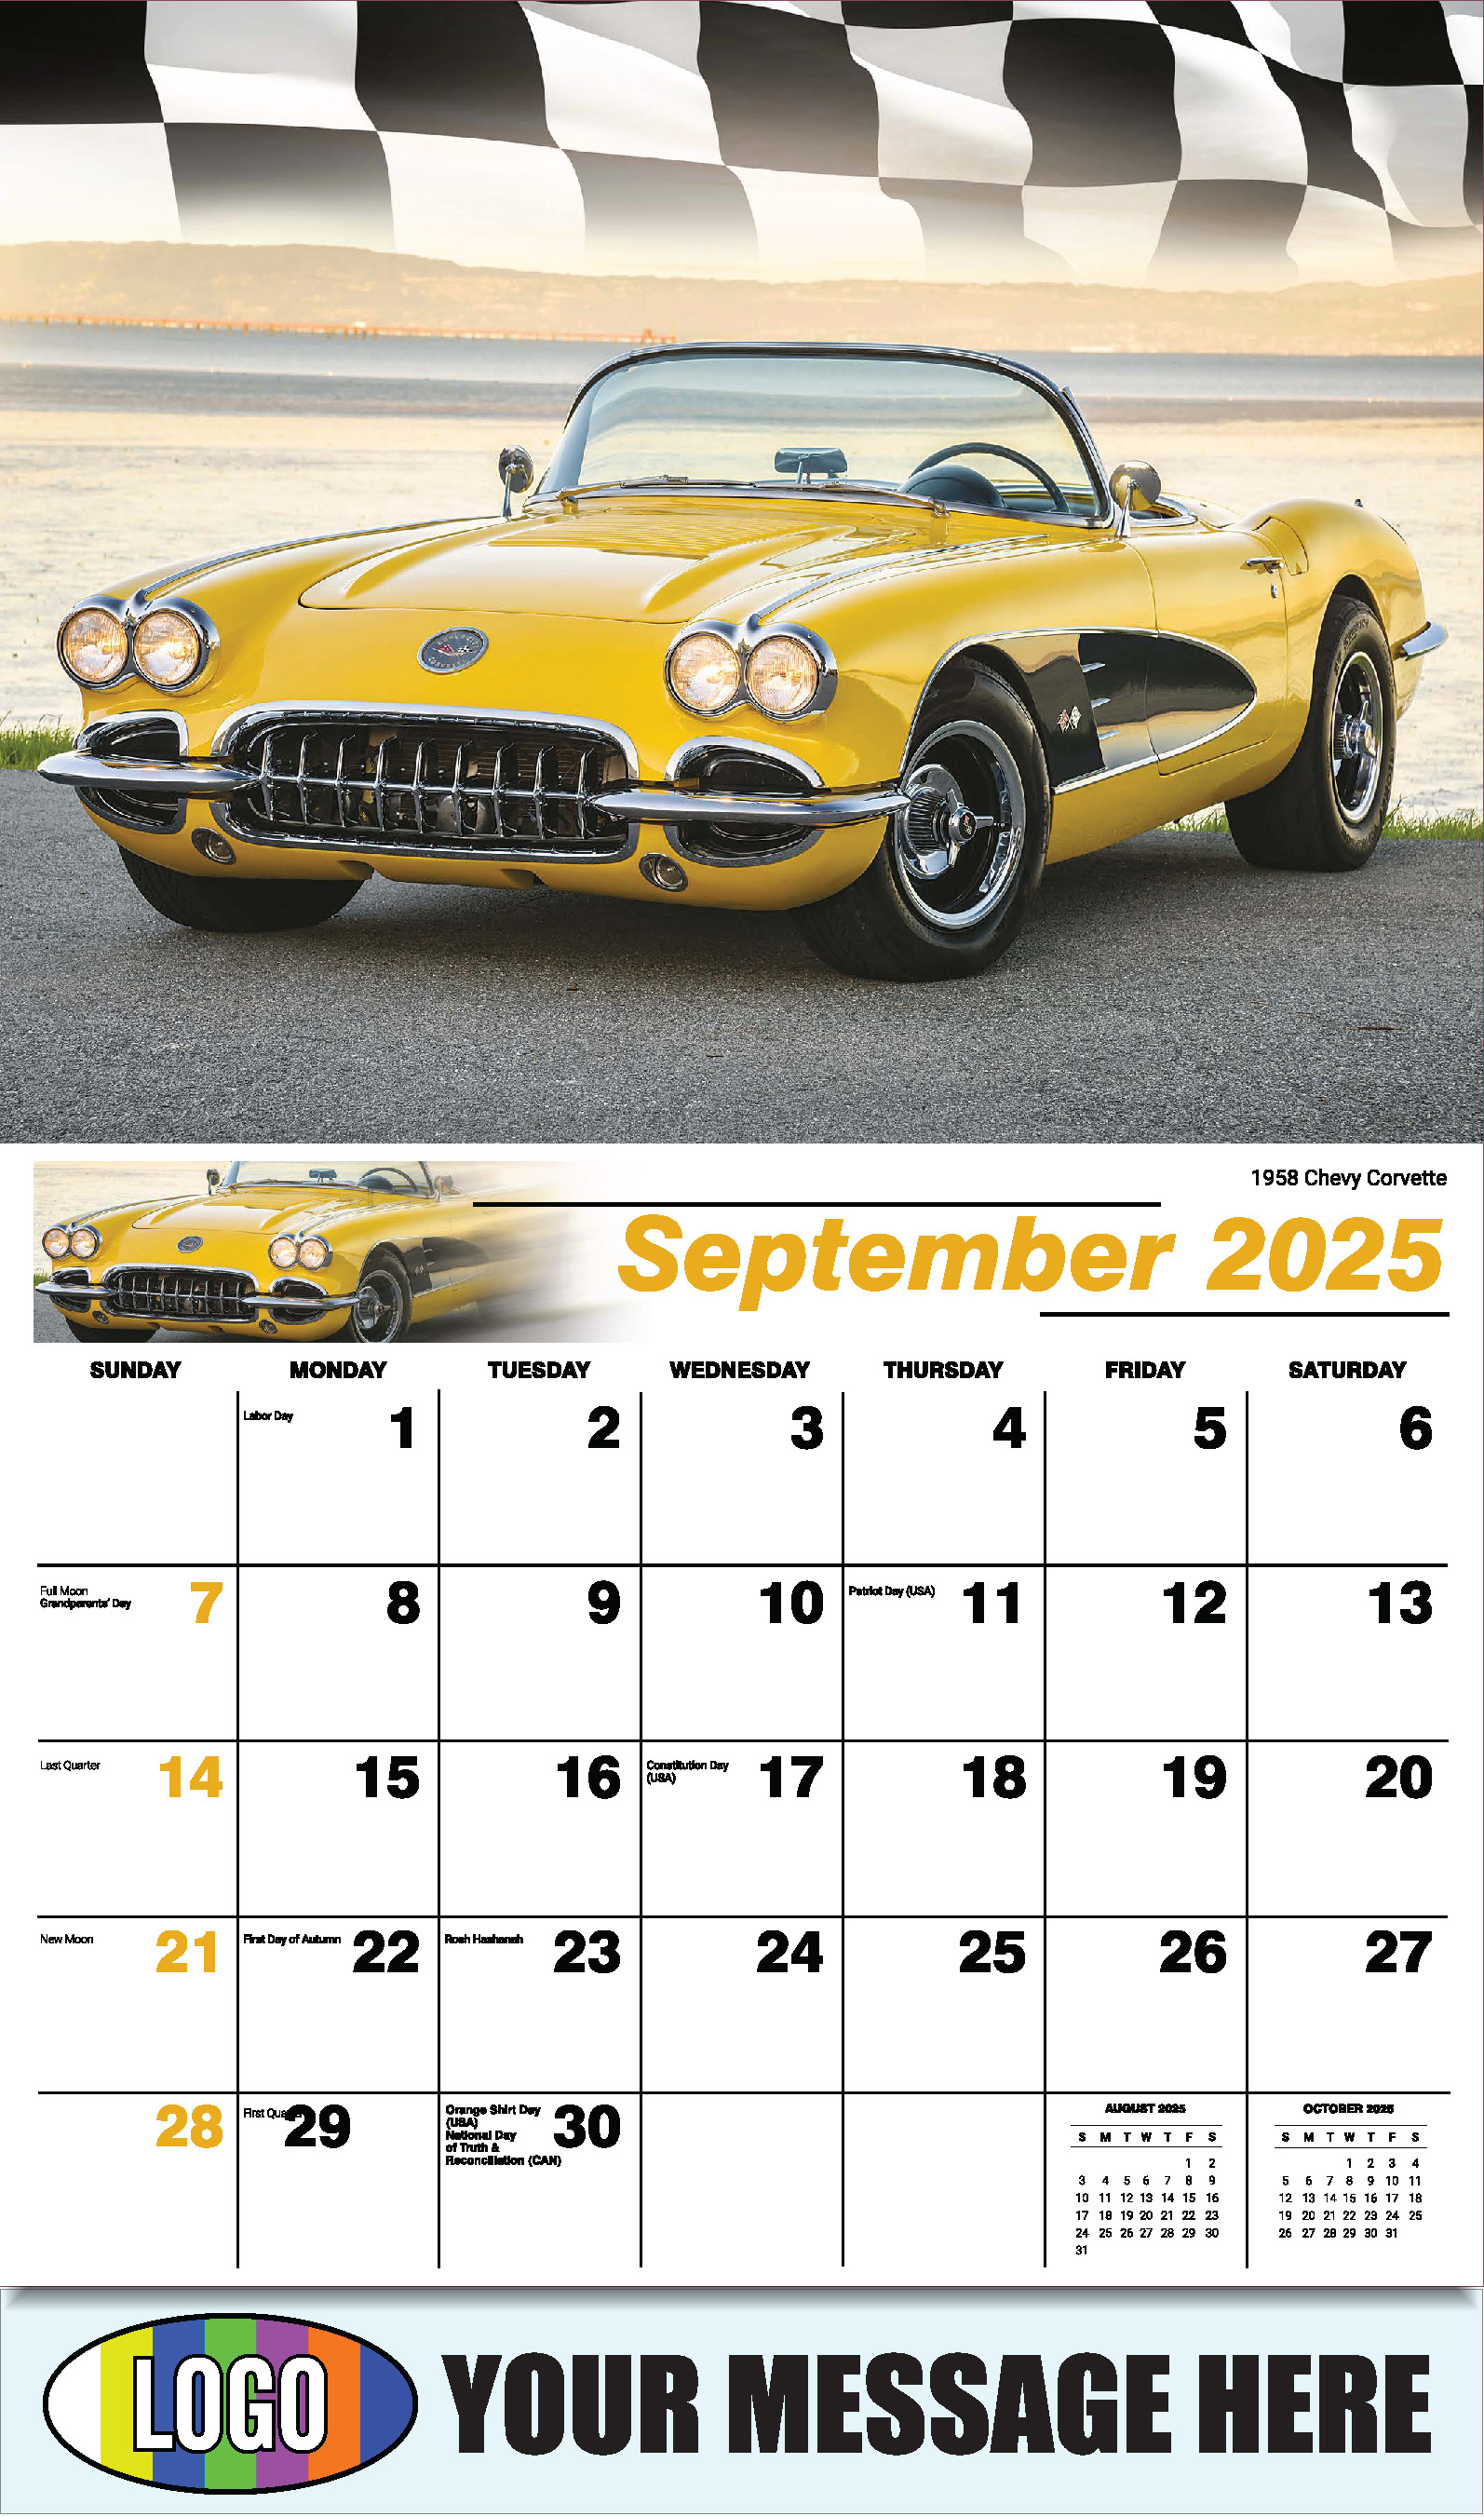 Road Warriors 2025 Automotive Business Promo Wall Calendar - September